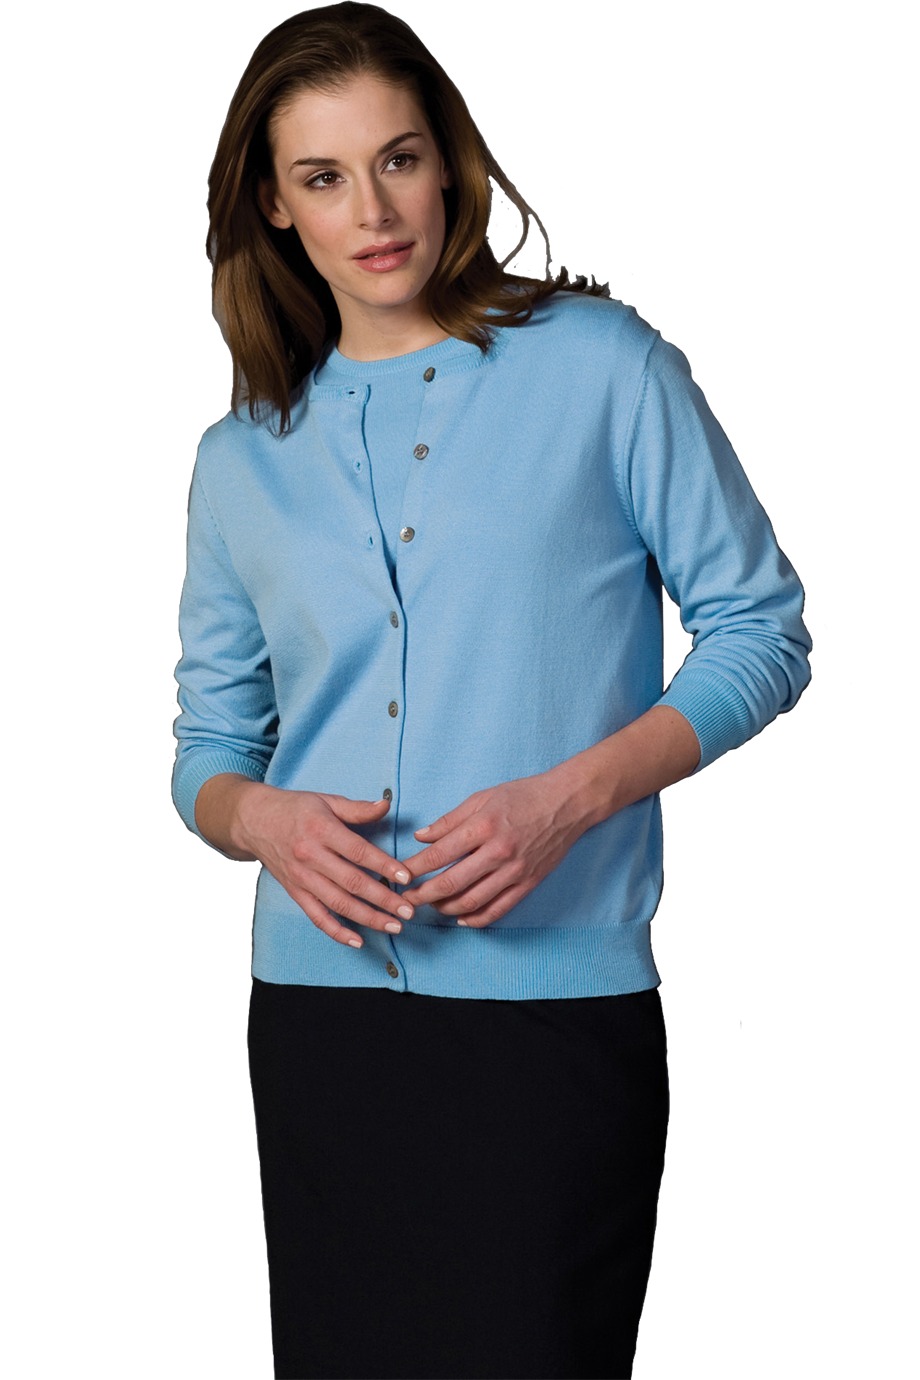 Edwards Garment 038 - Women's Corporate Performance Twinset Jewel Neck